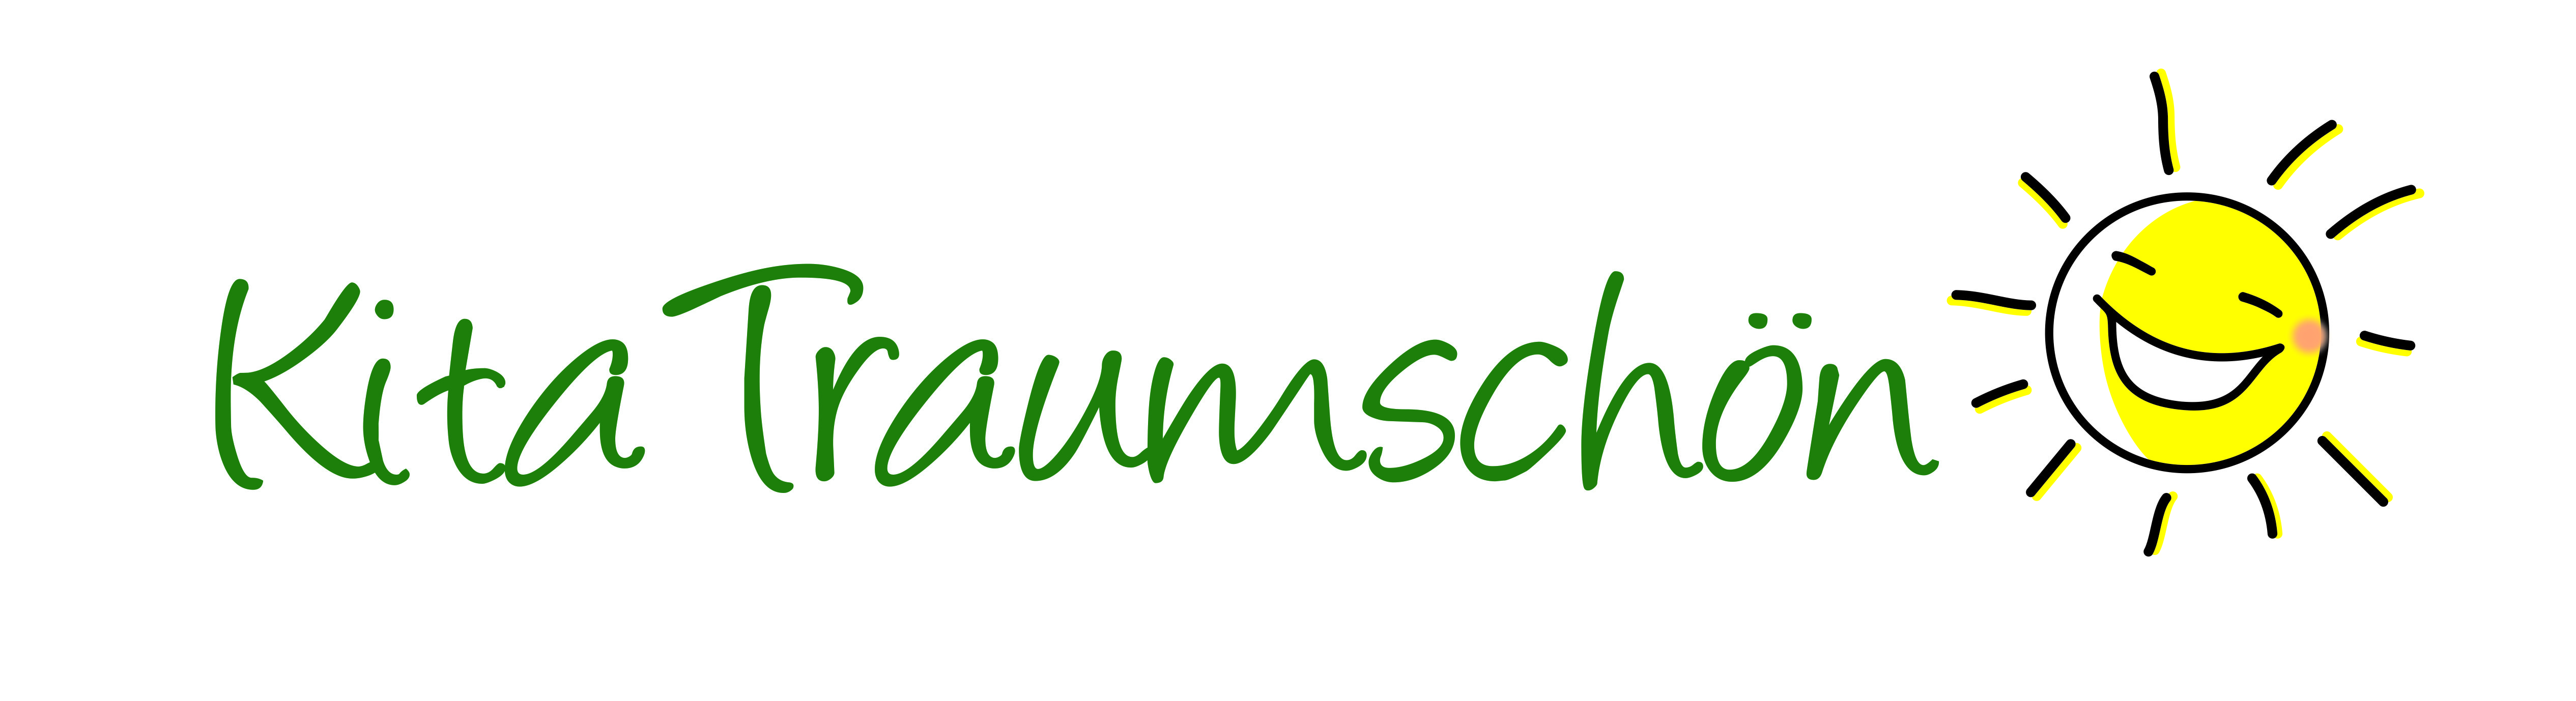 Logo1 Kita Traumschn